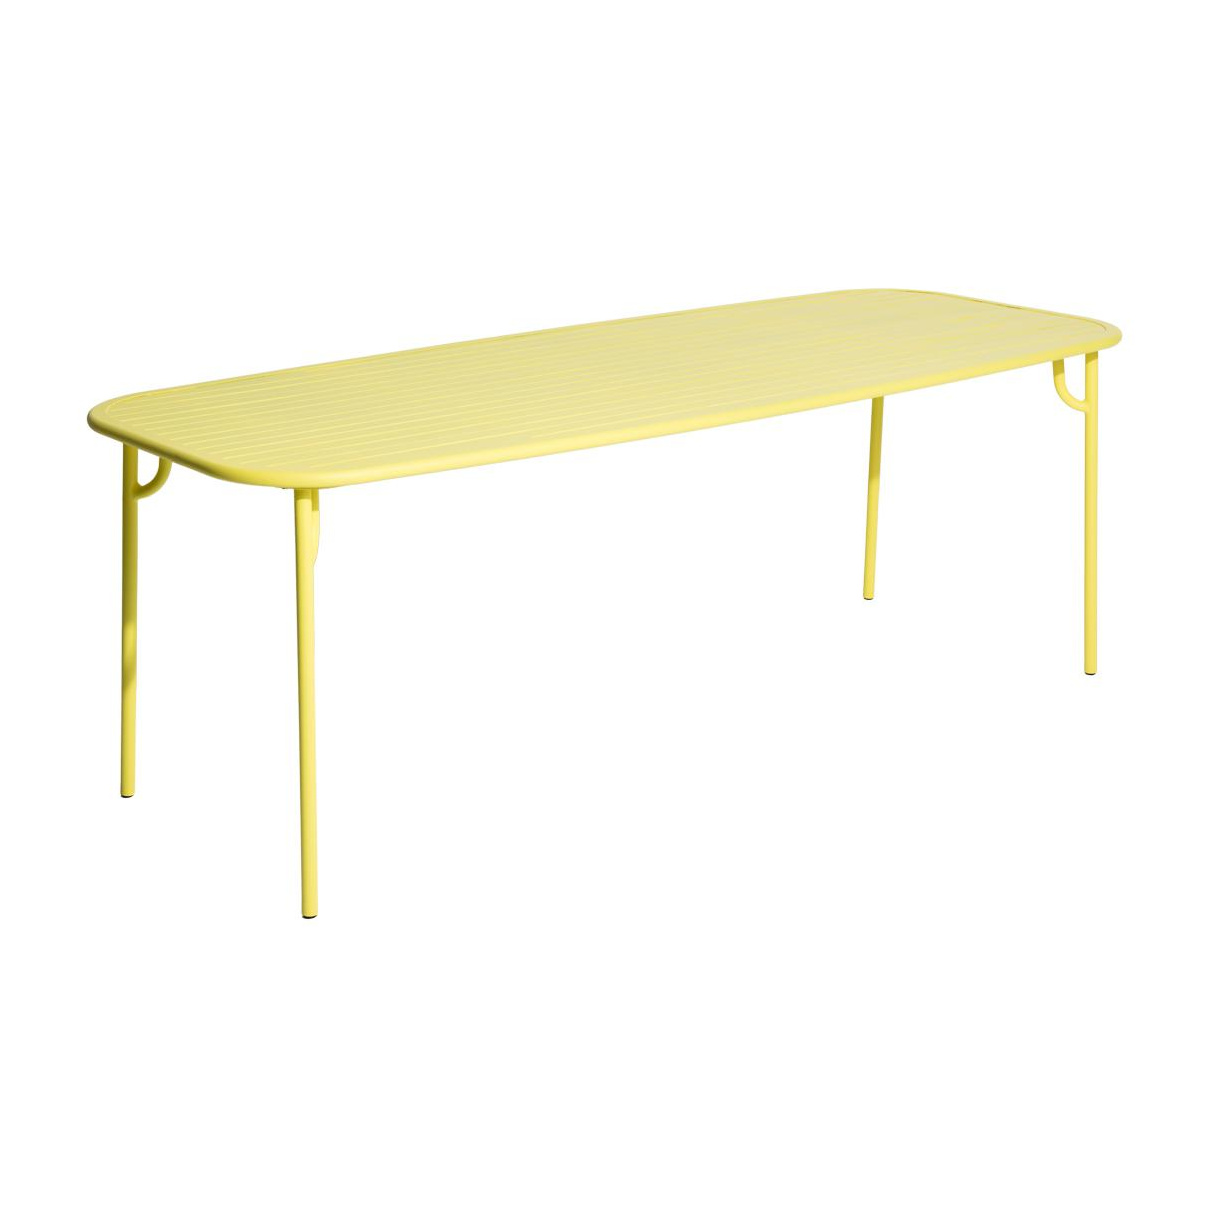 Petite Friture - Week-End Gartentisch 85x220cm - gelb/matt lackiert/BxHxT 220x75x85cm/Anti - UV Beschichtung von Petite Friture